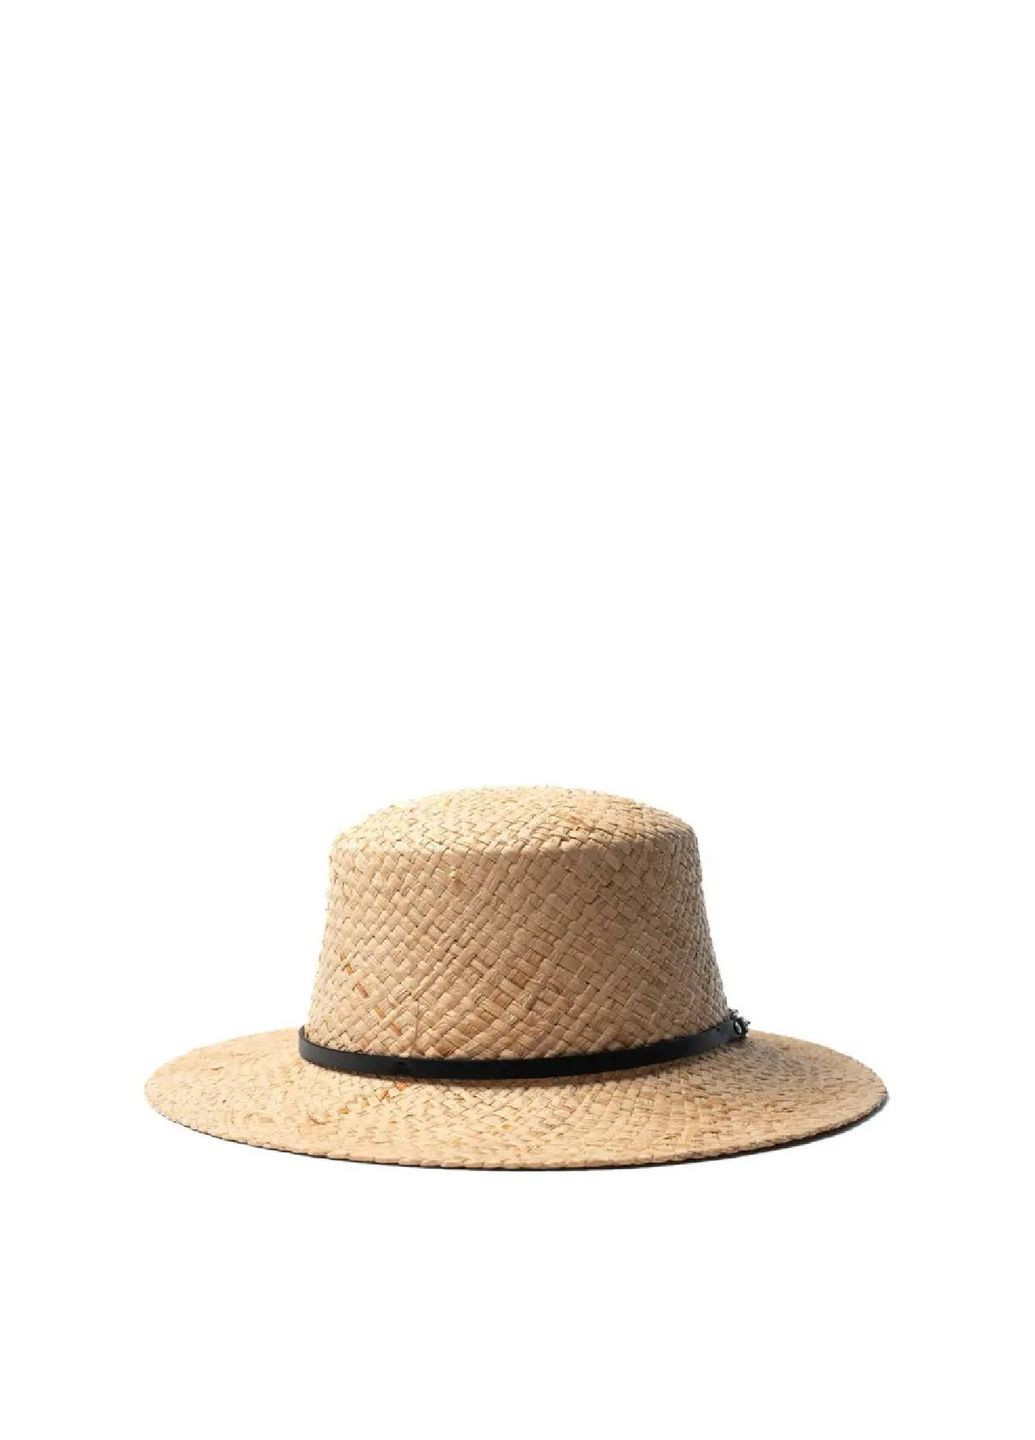 Шляпа канотье мужская рафия желтая JODIE 844-156 LuckyLOOK 844-156м (292668863)